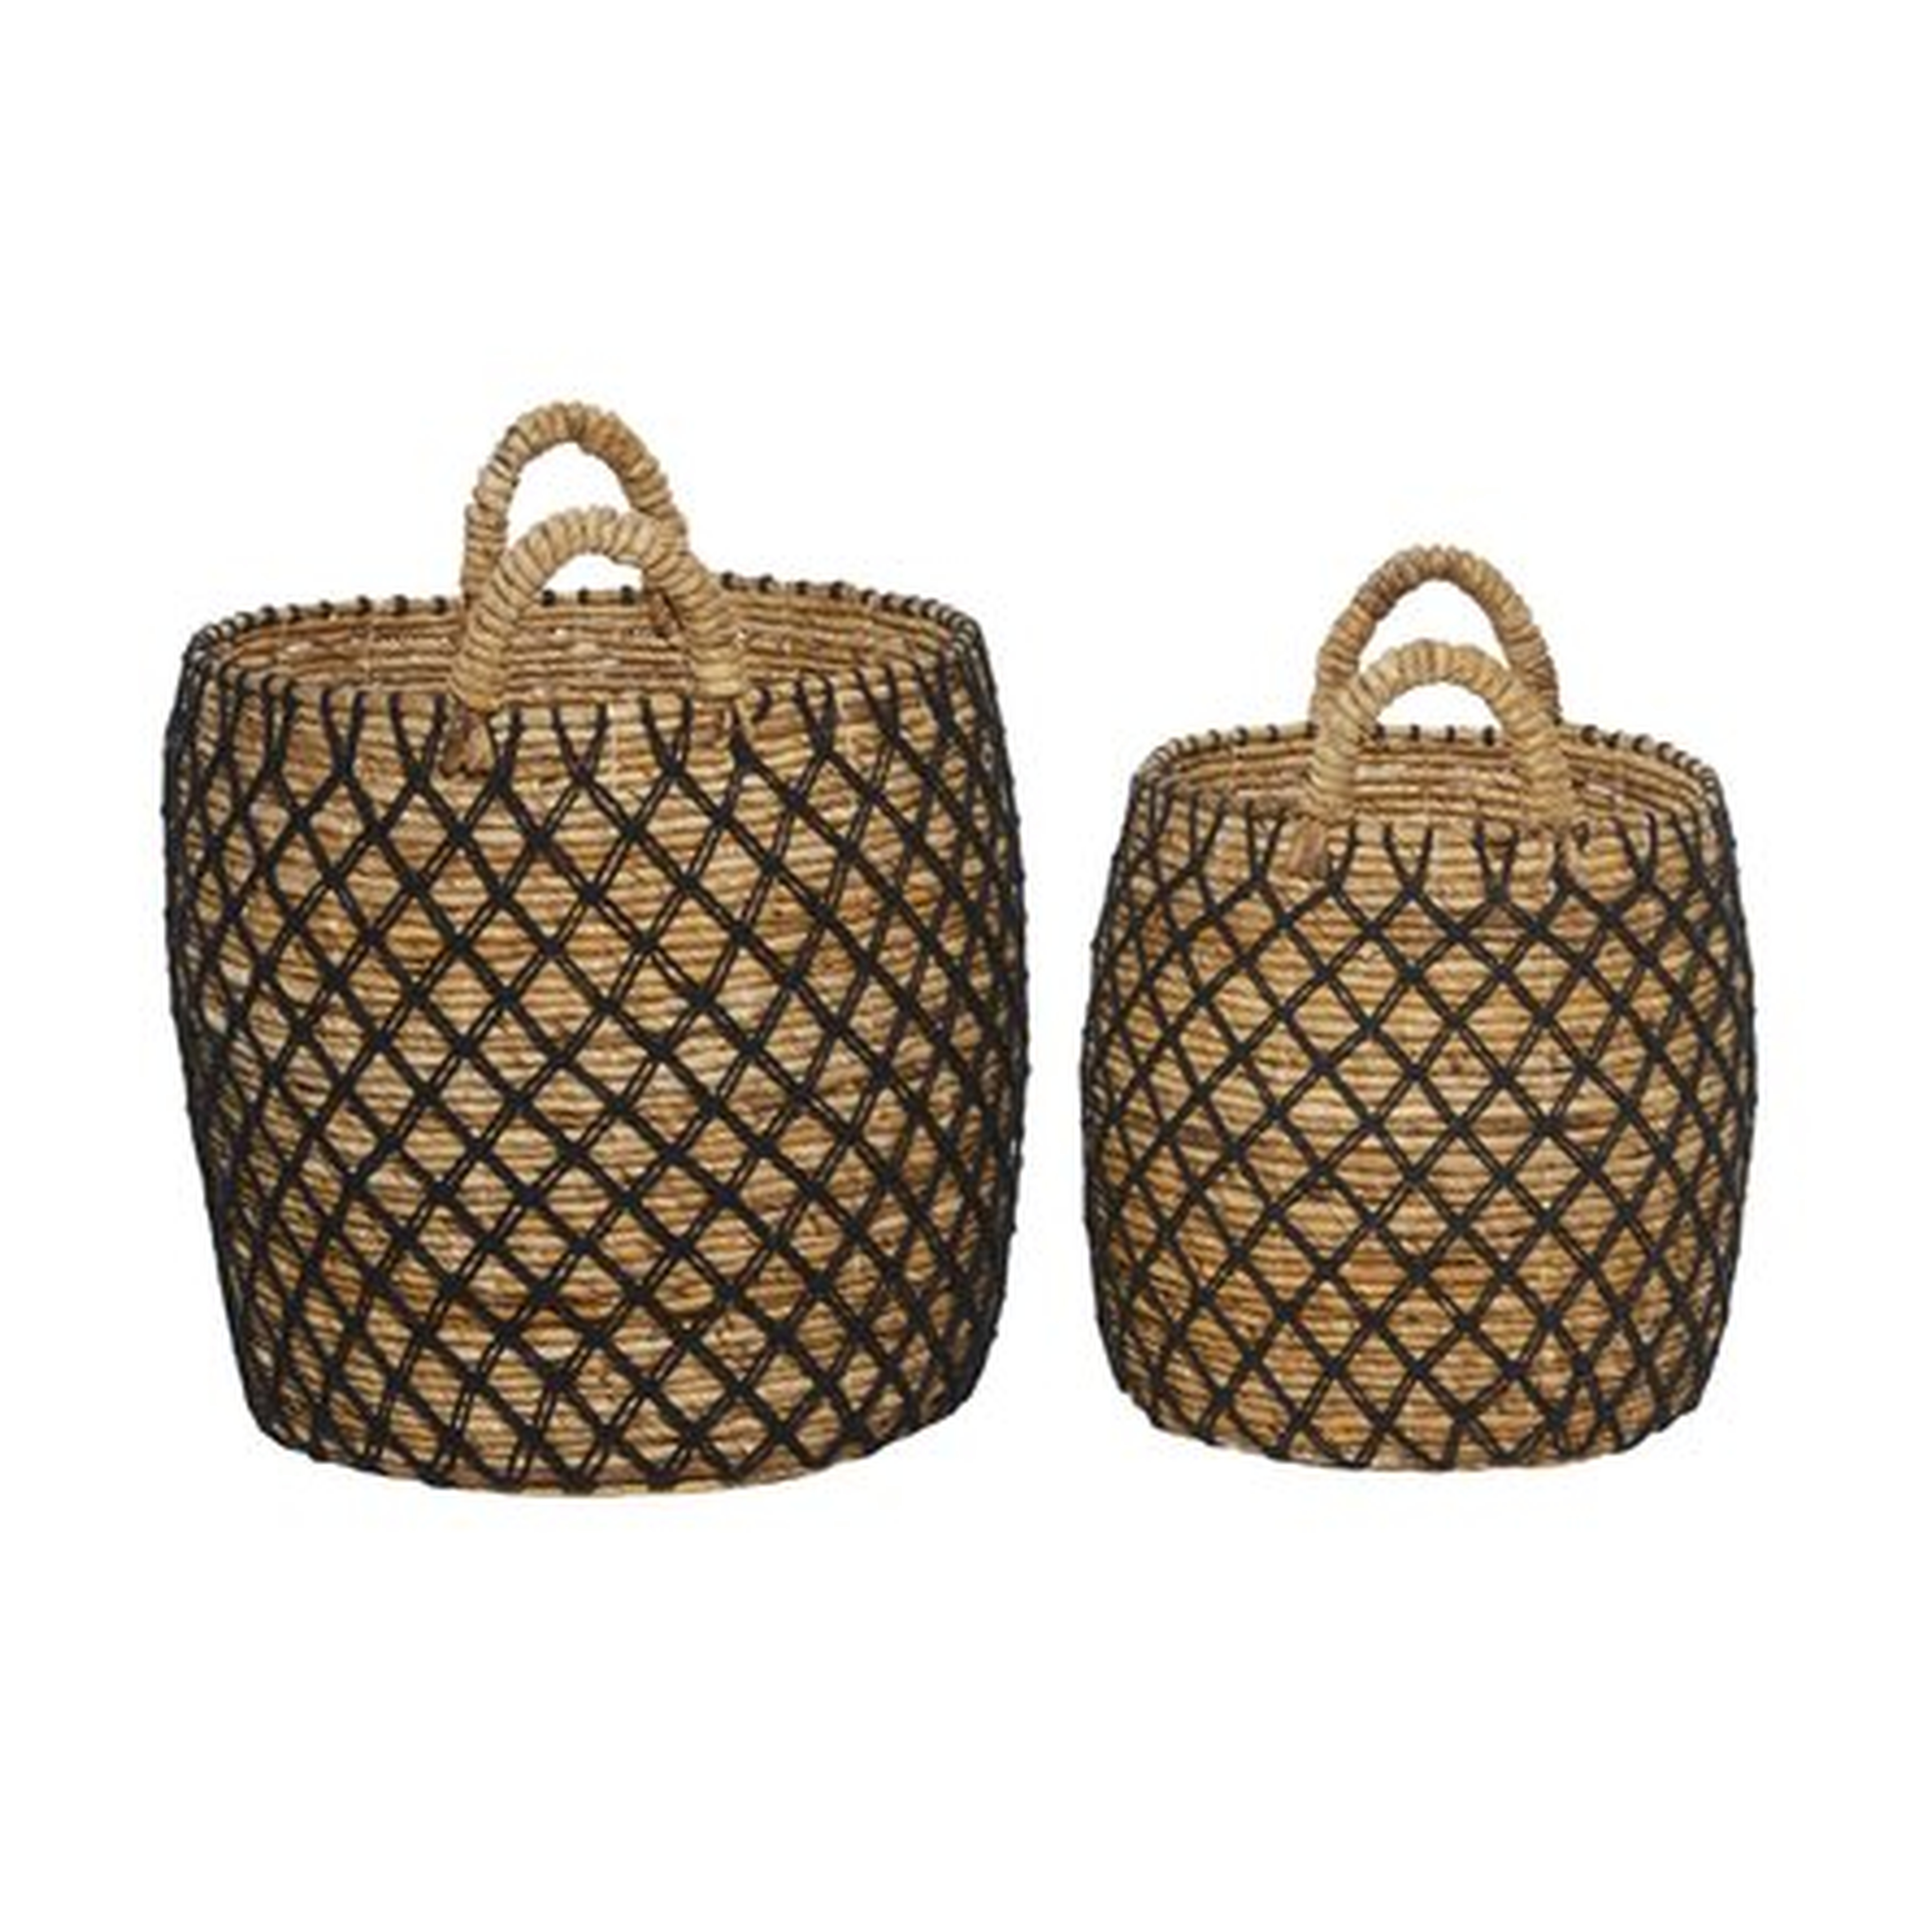 Banana Leaf Wicker Baskets, Set of 2 - Wayfair